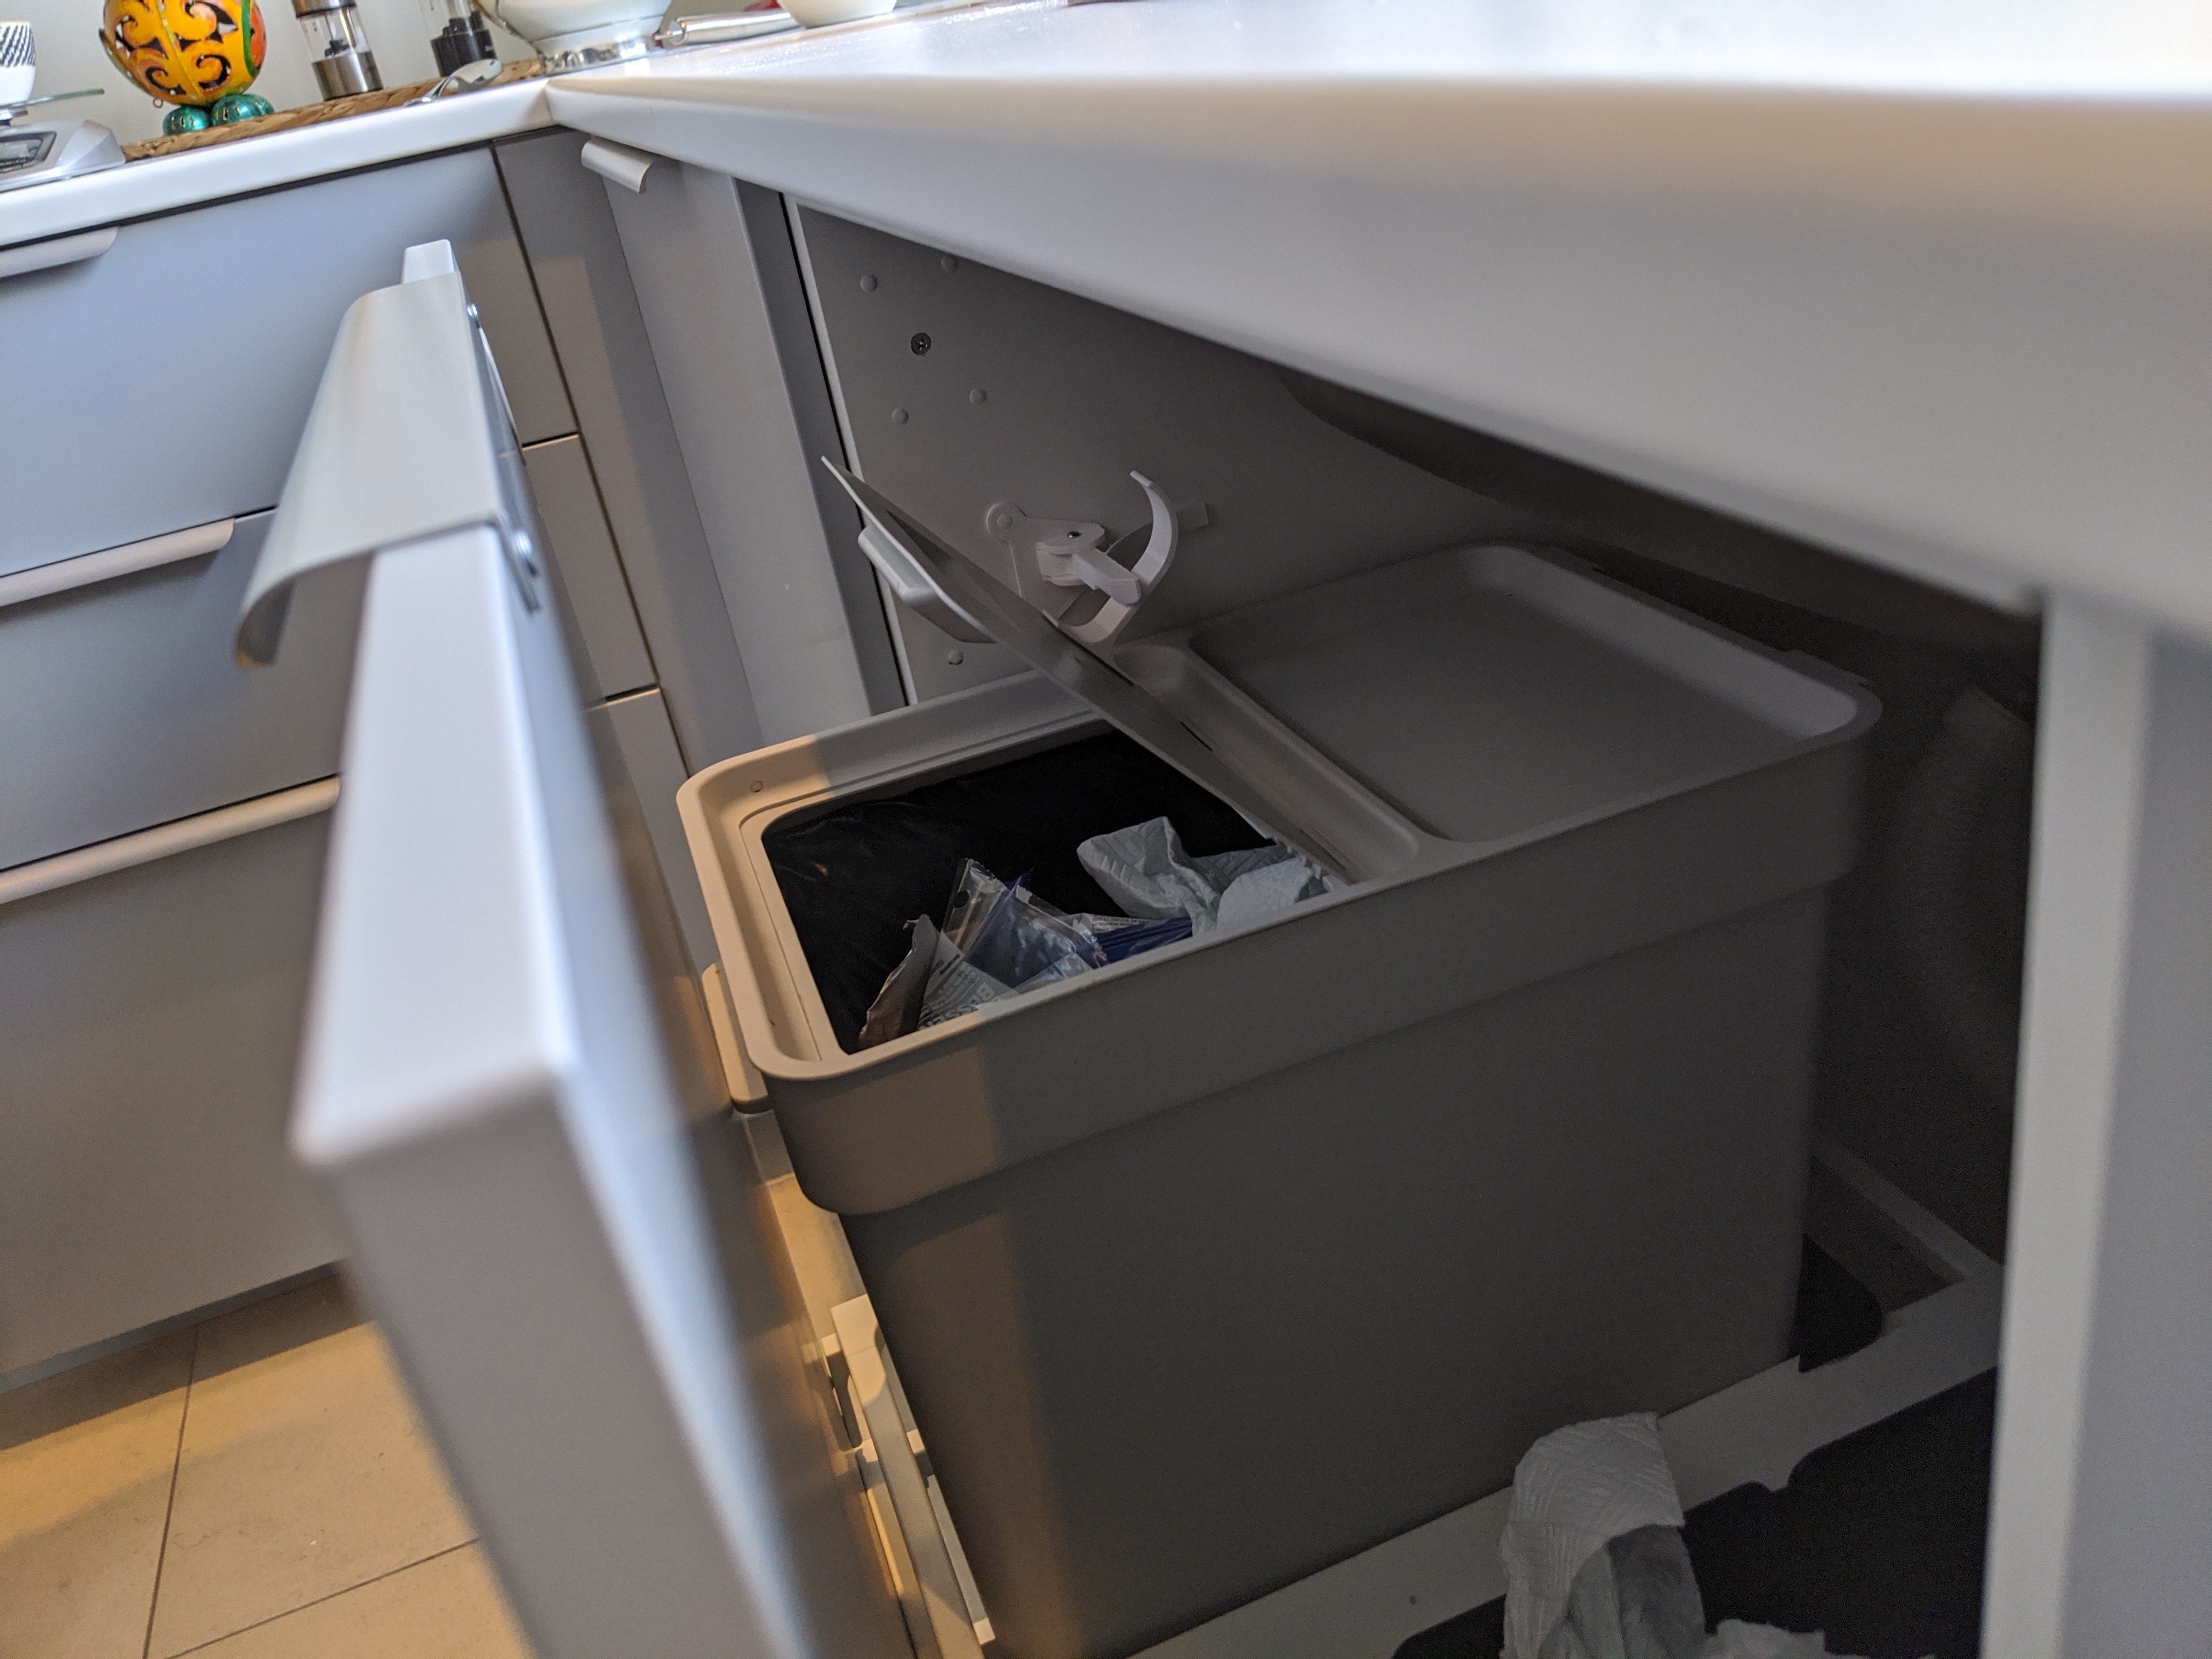 Automatic lid opener voor IKEA HÅLLBAR drawer bin.